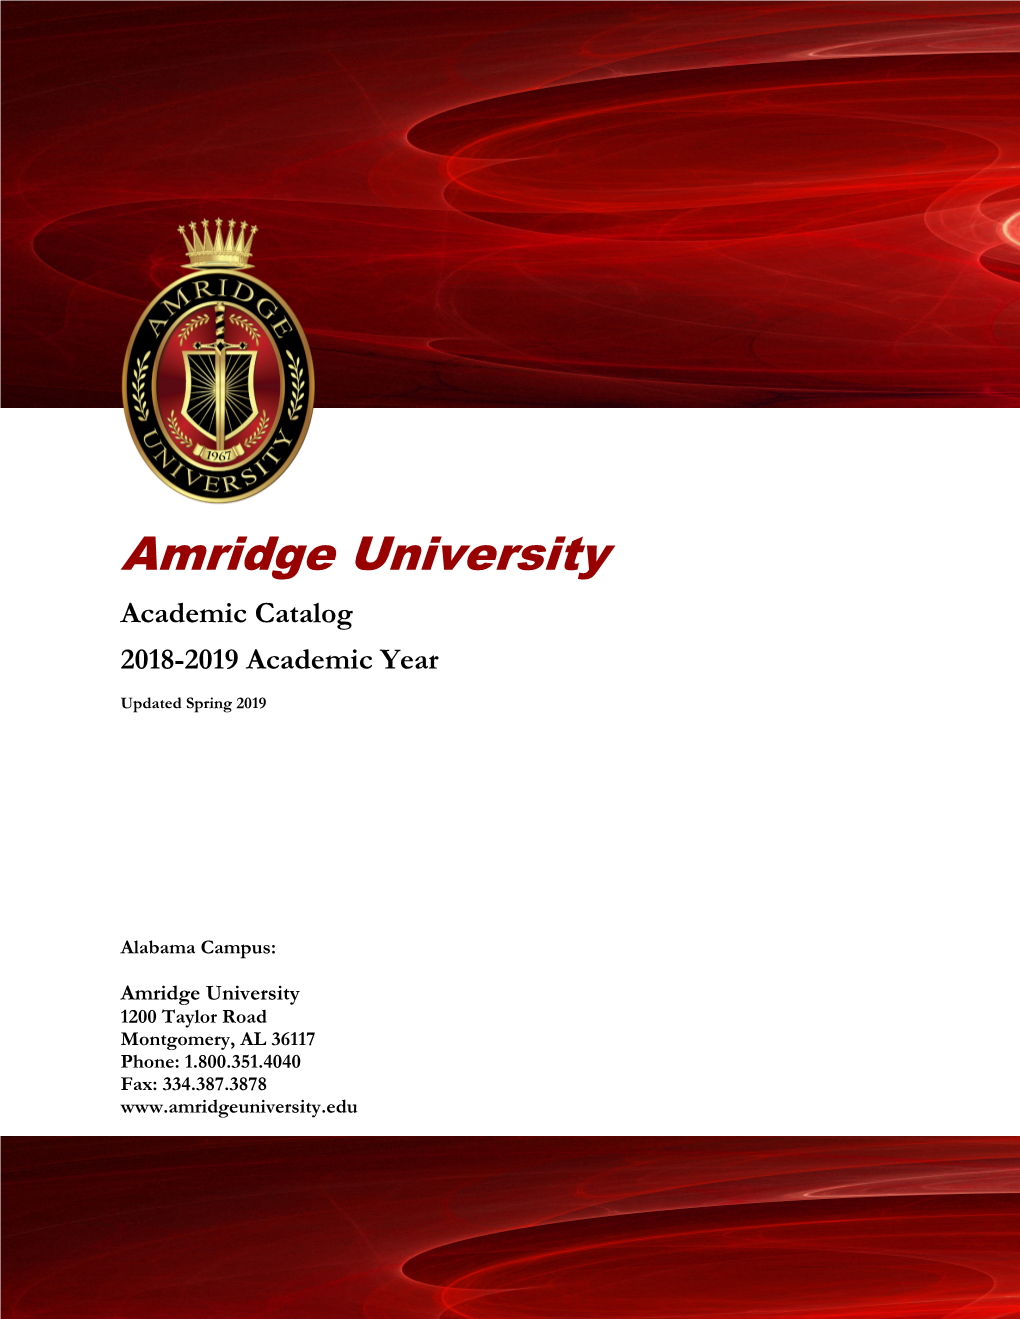 Academic Catalog 2018-2019